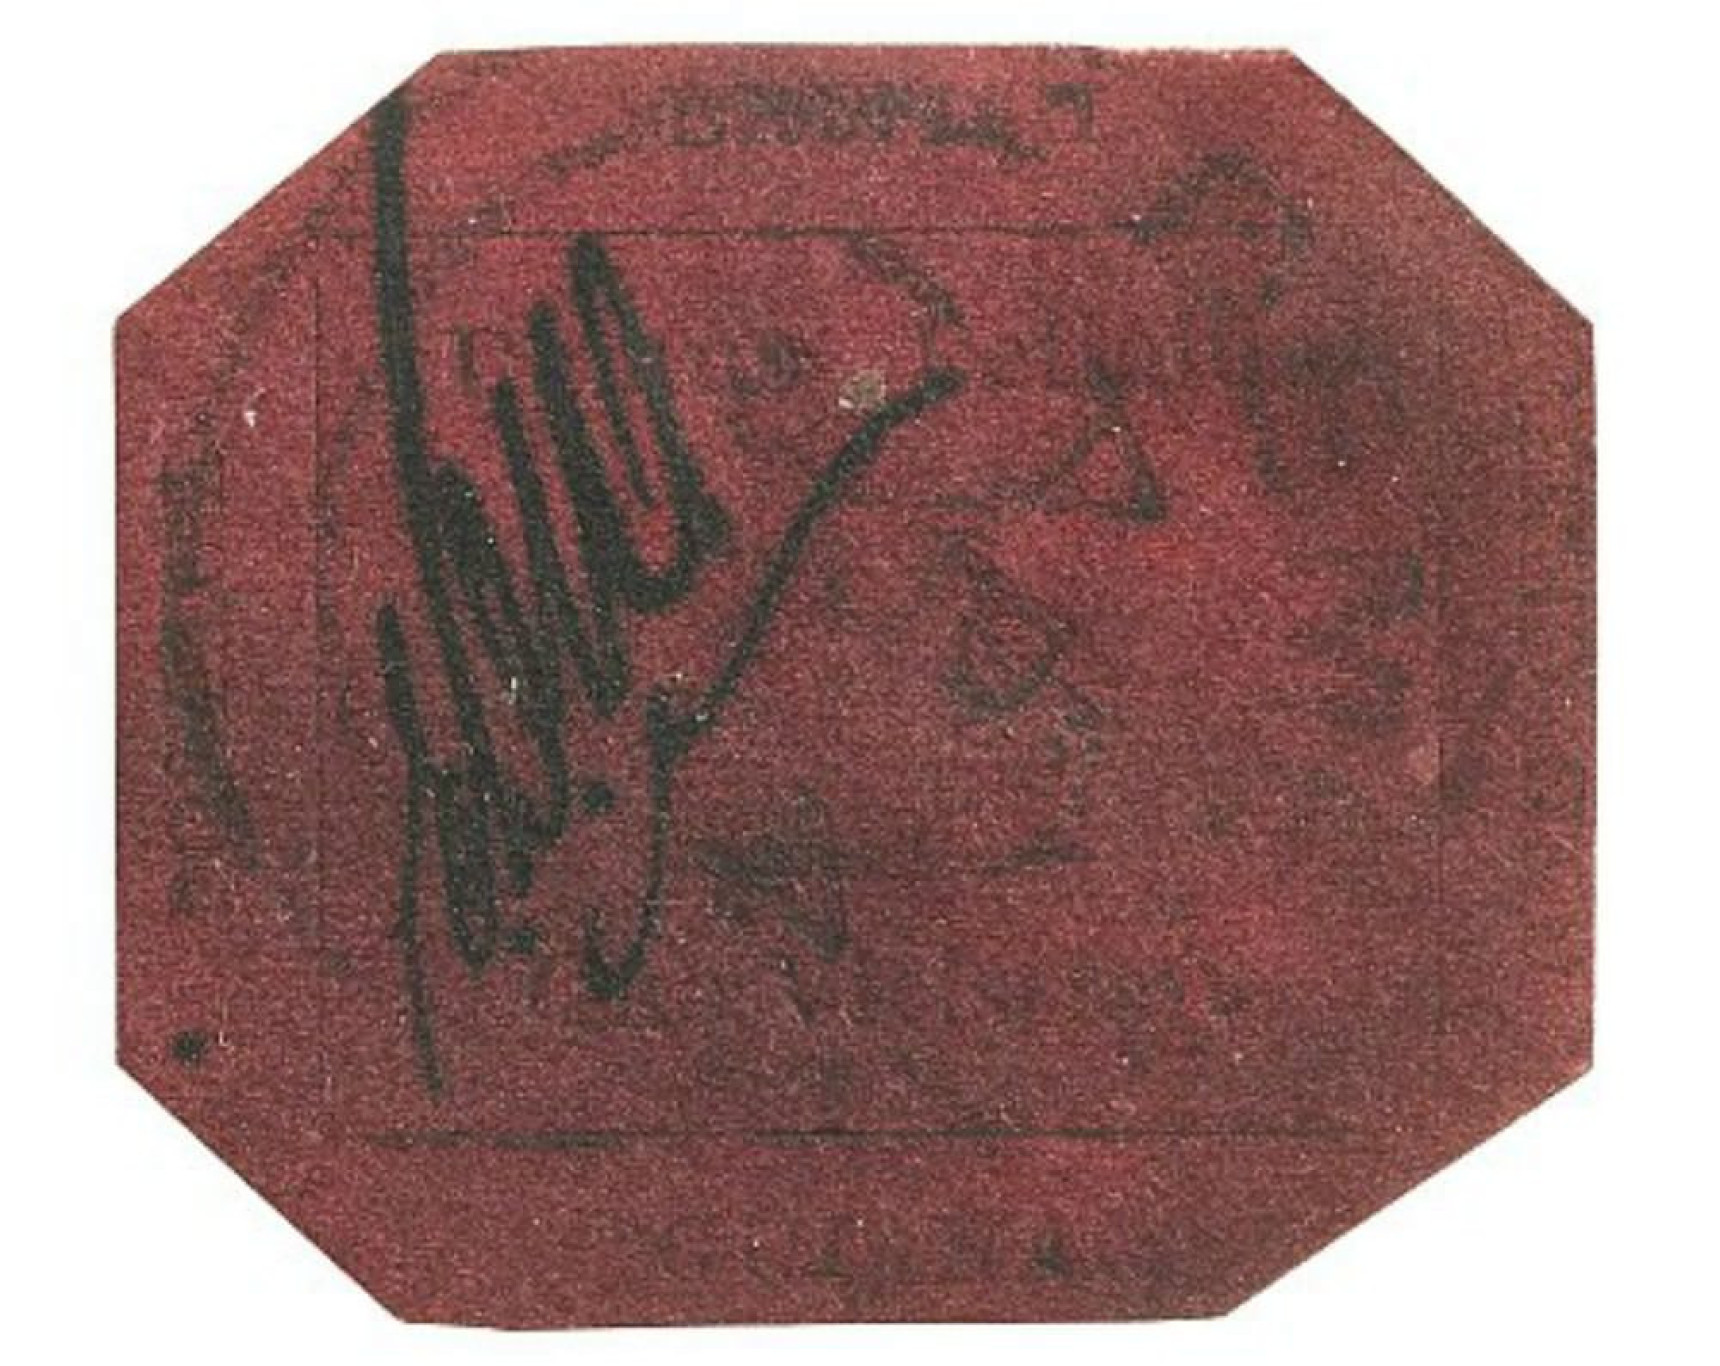 1854 Magenta stamp